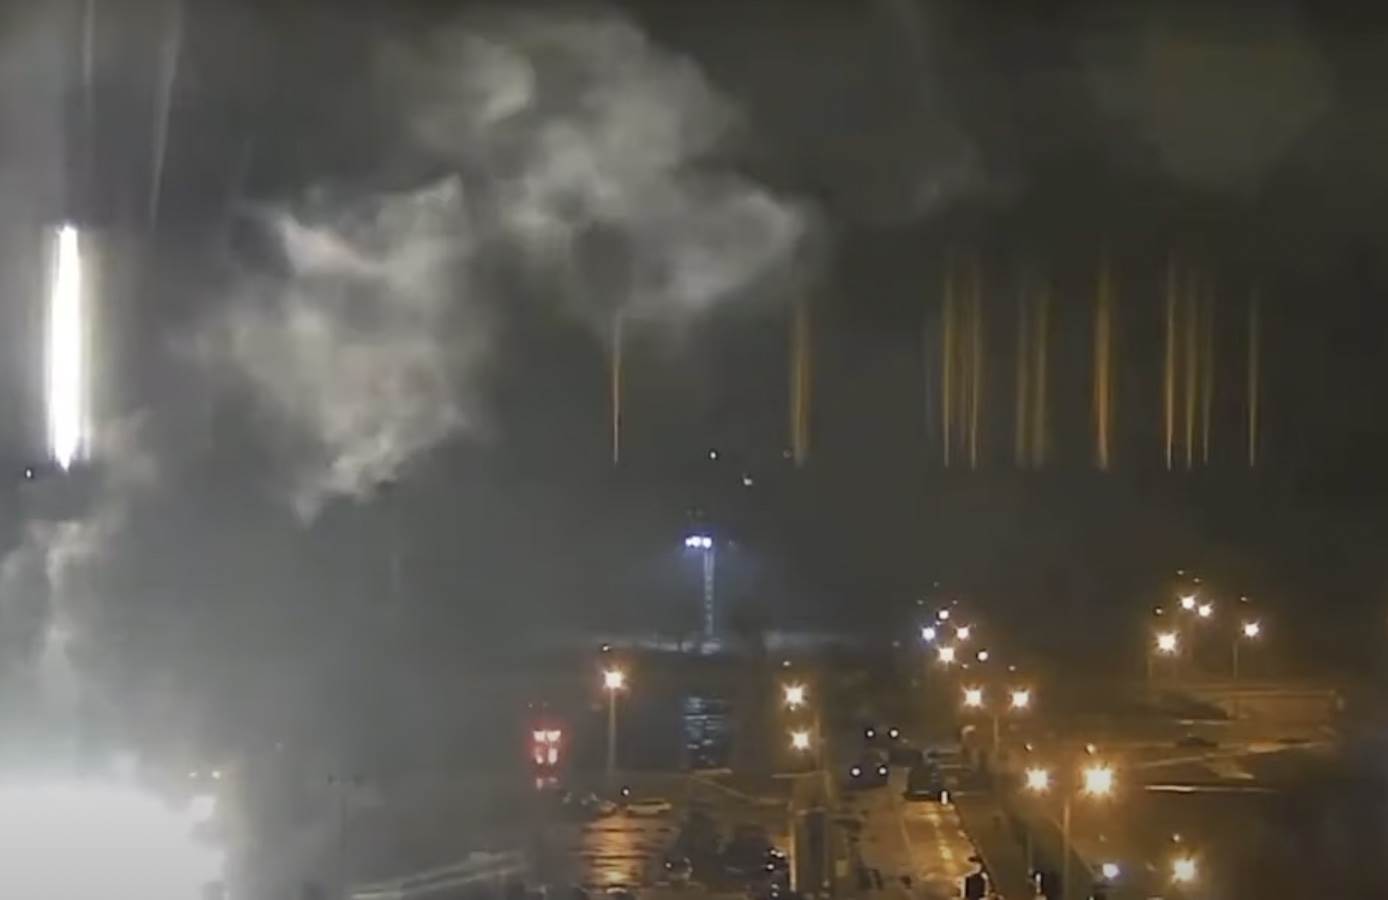  Rusi lansirali rakete iznad nuklearne elektrane Zaporožje 